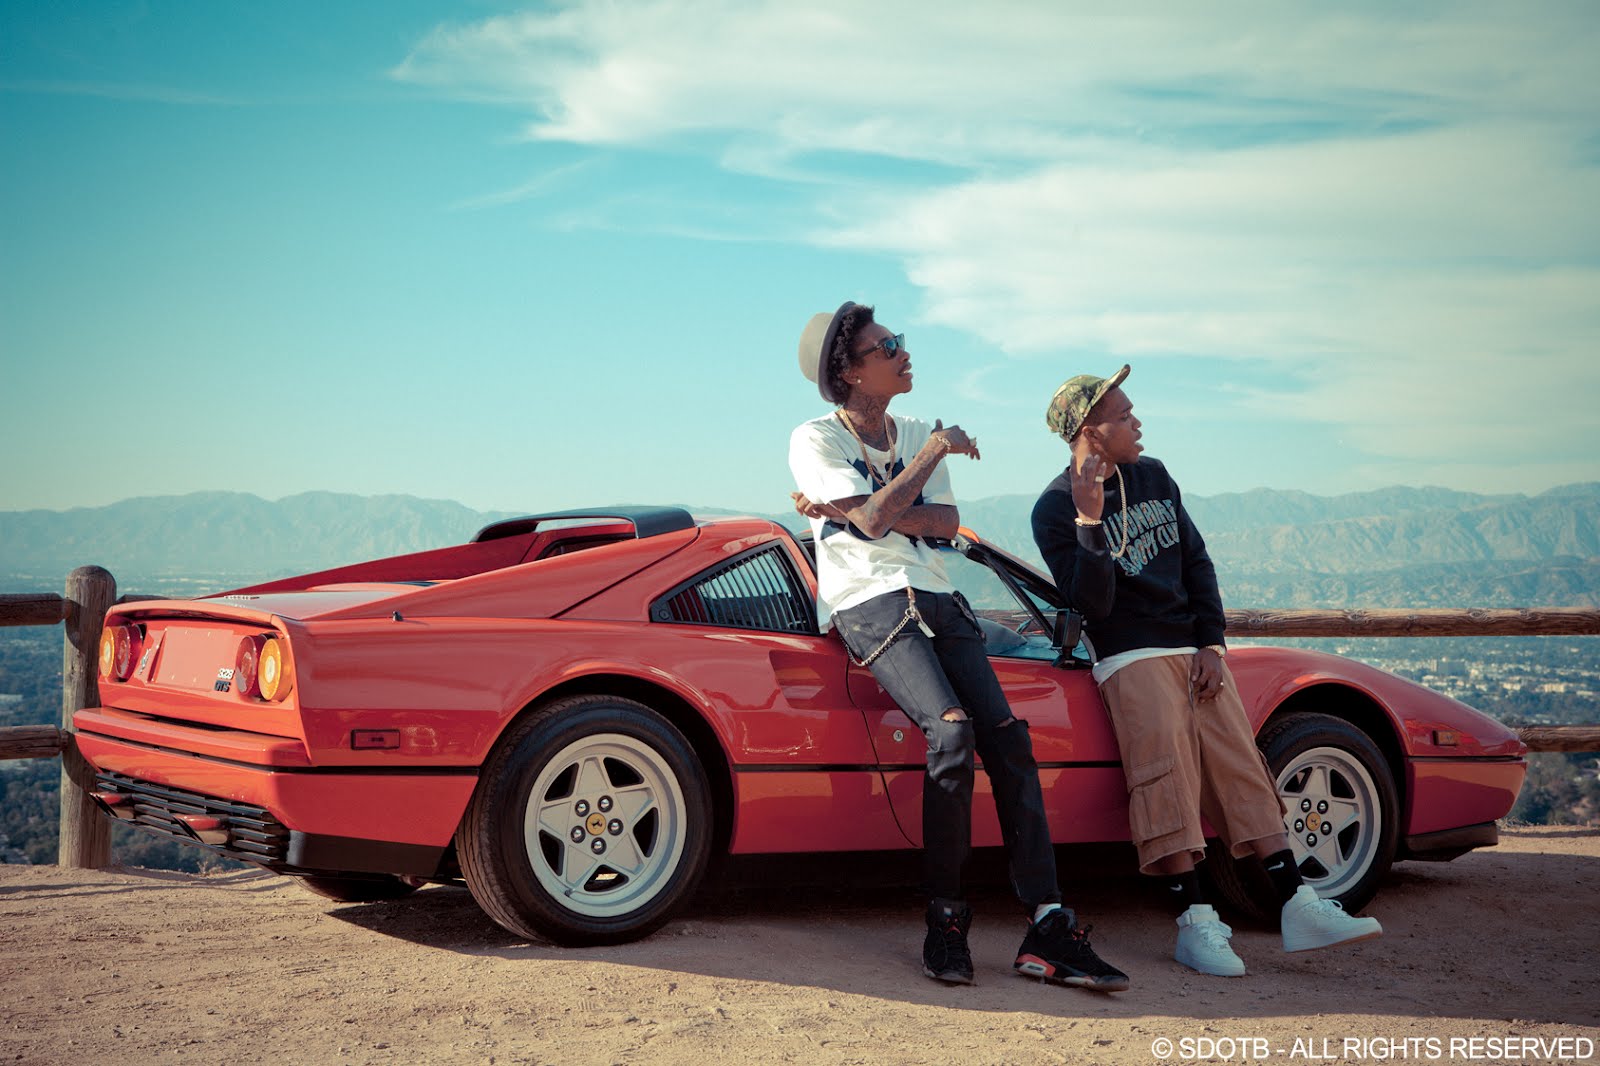 Curren$y & Wiz Khalifa Bring Us The Track "Situations"